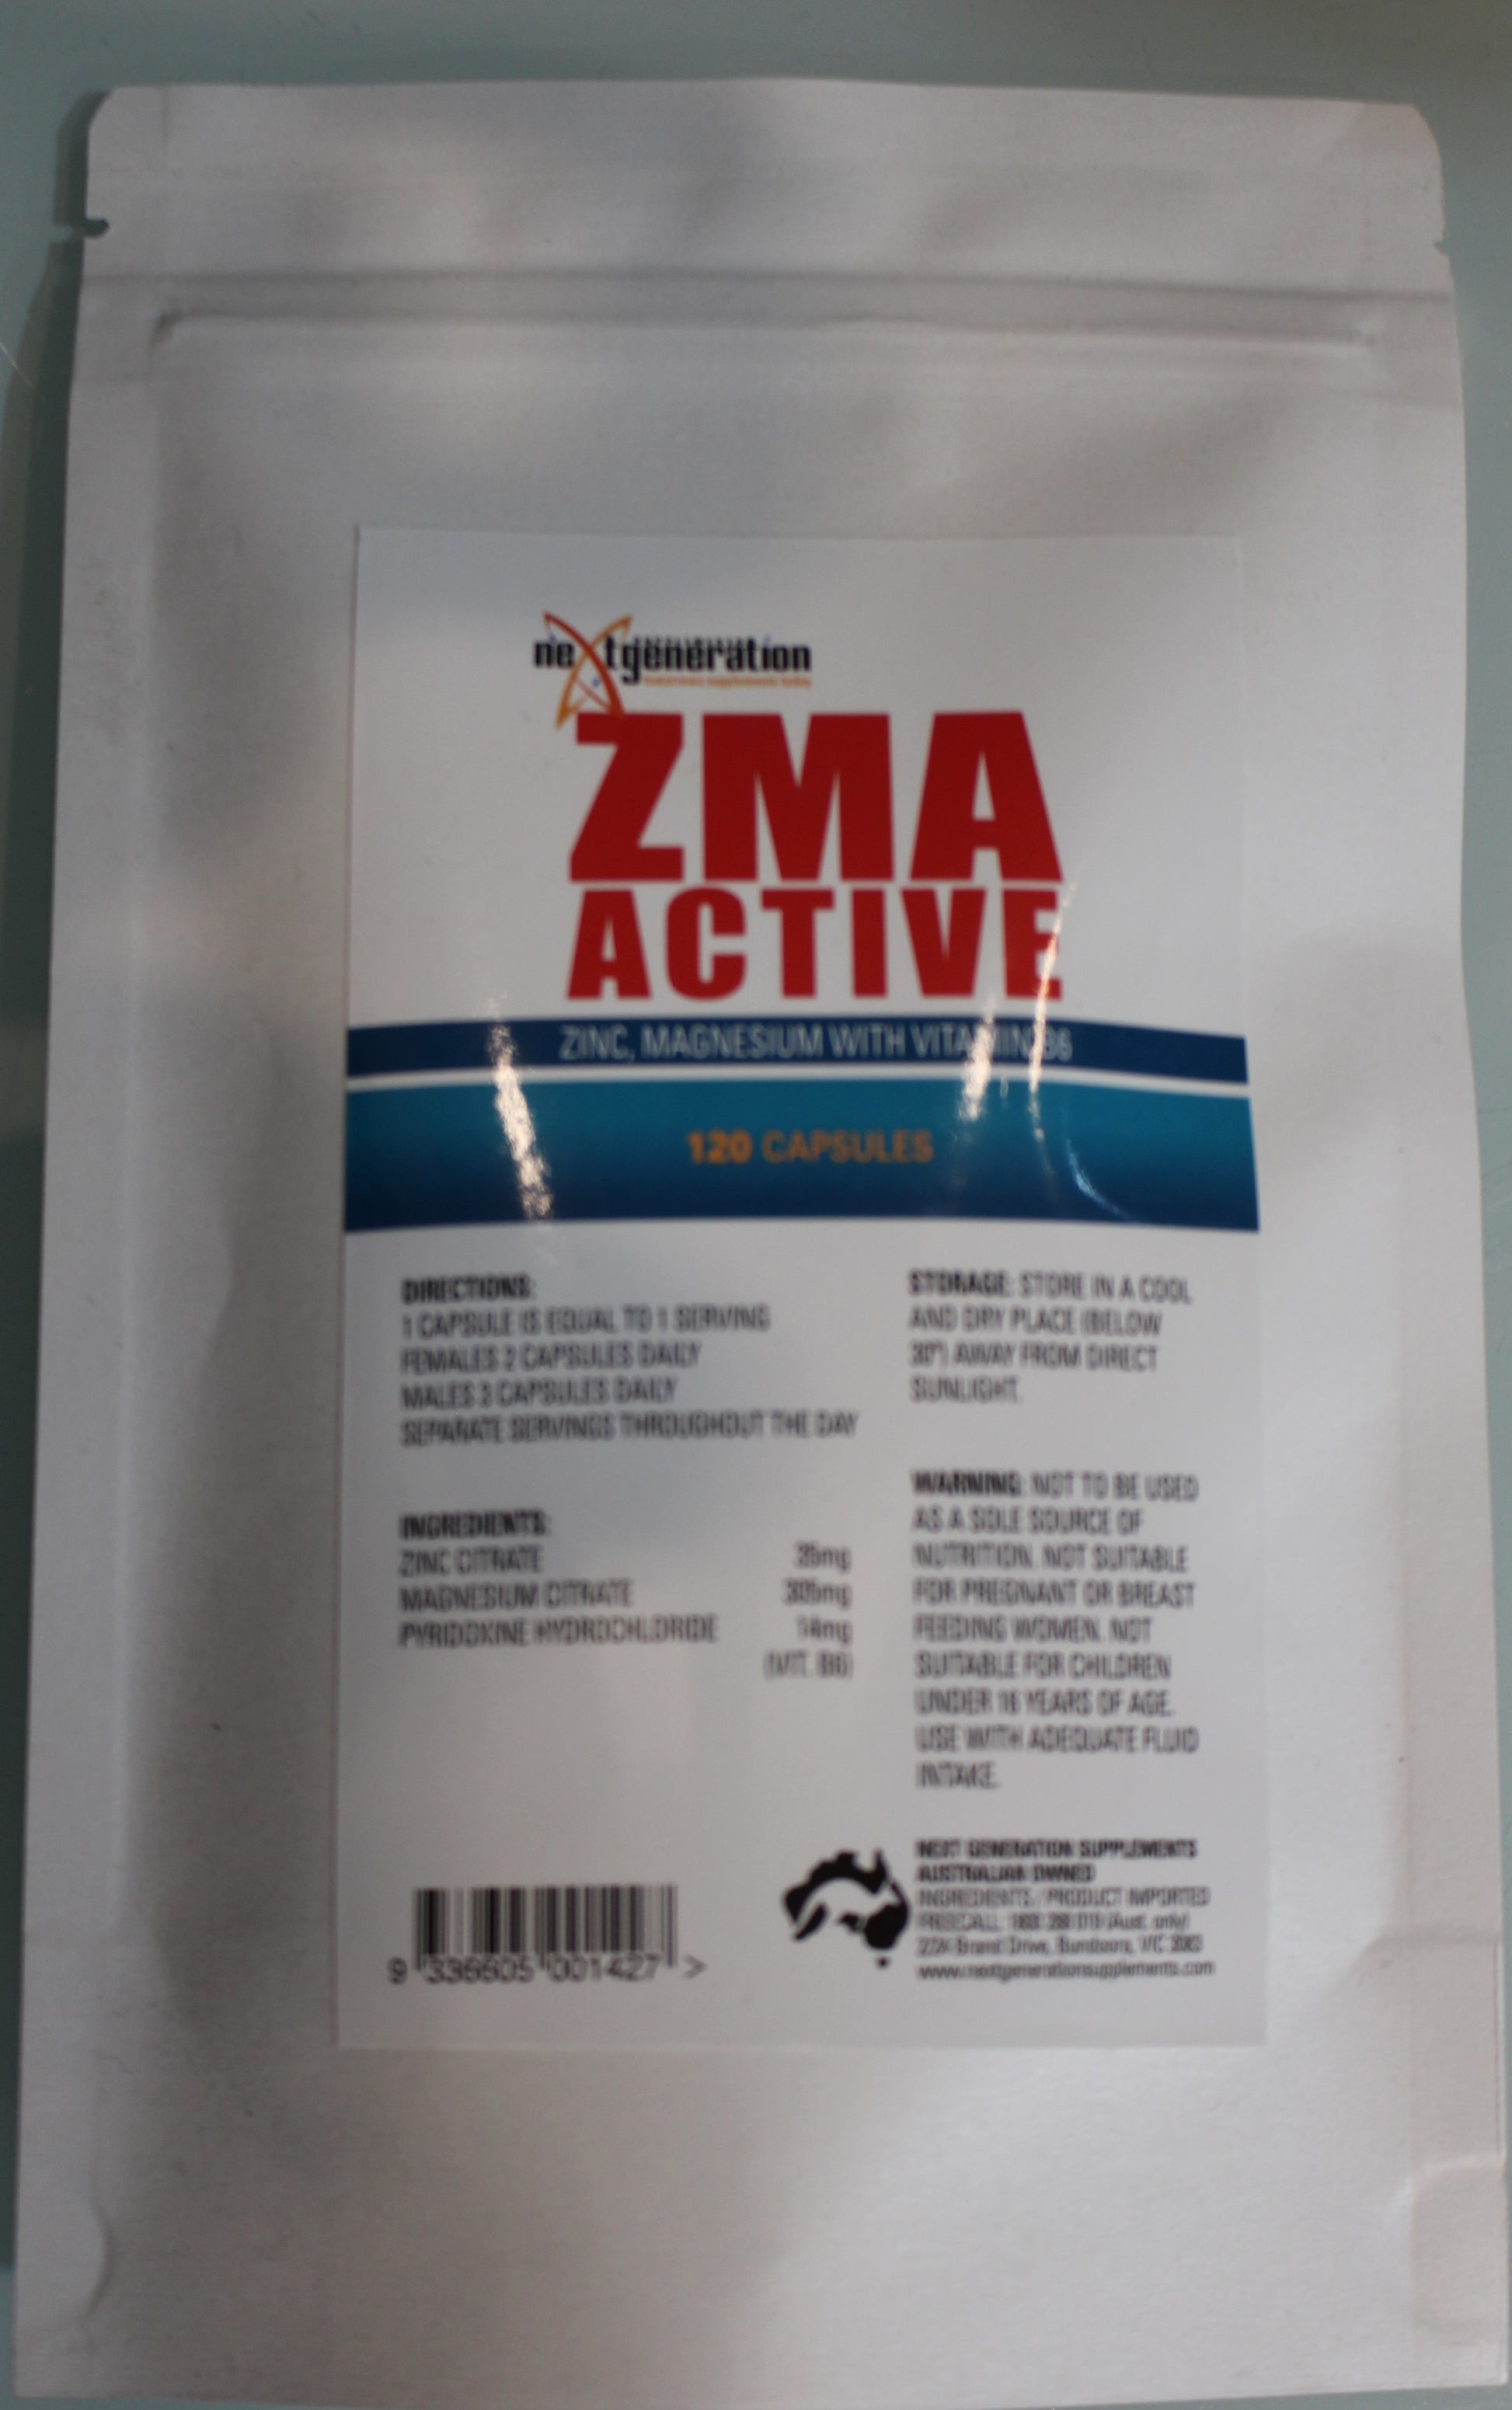 Next generation ZMA Active